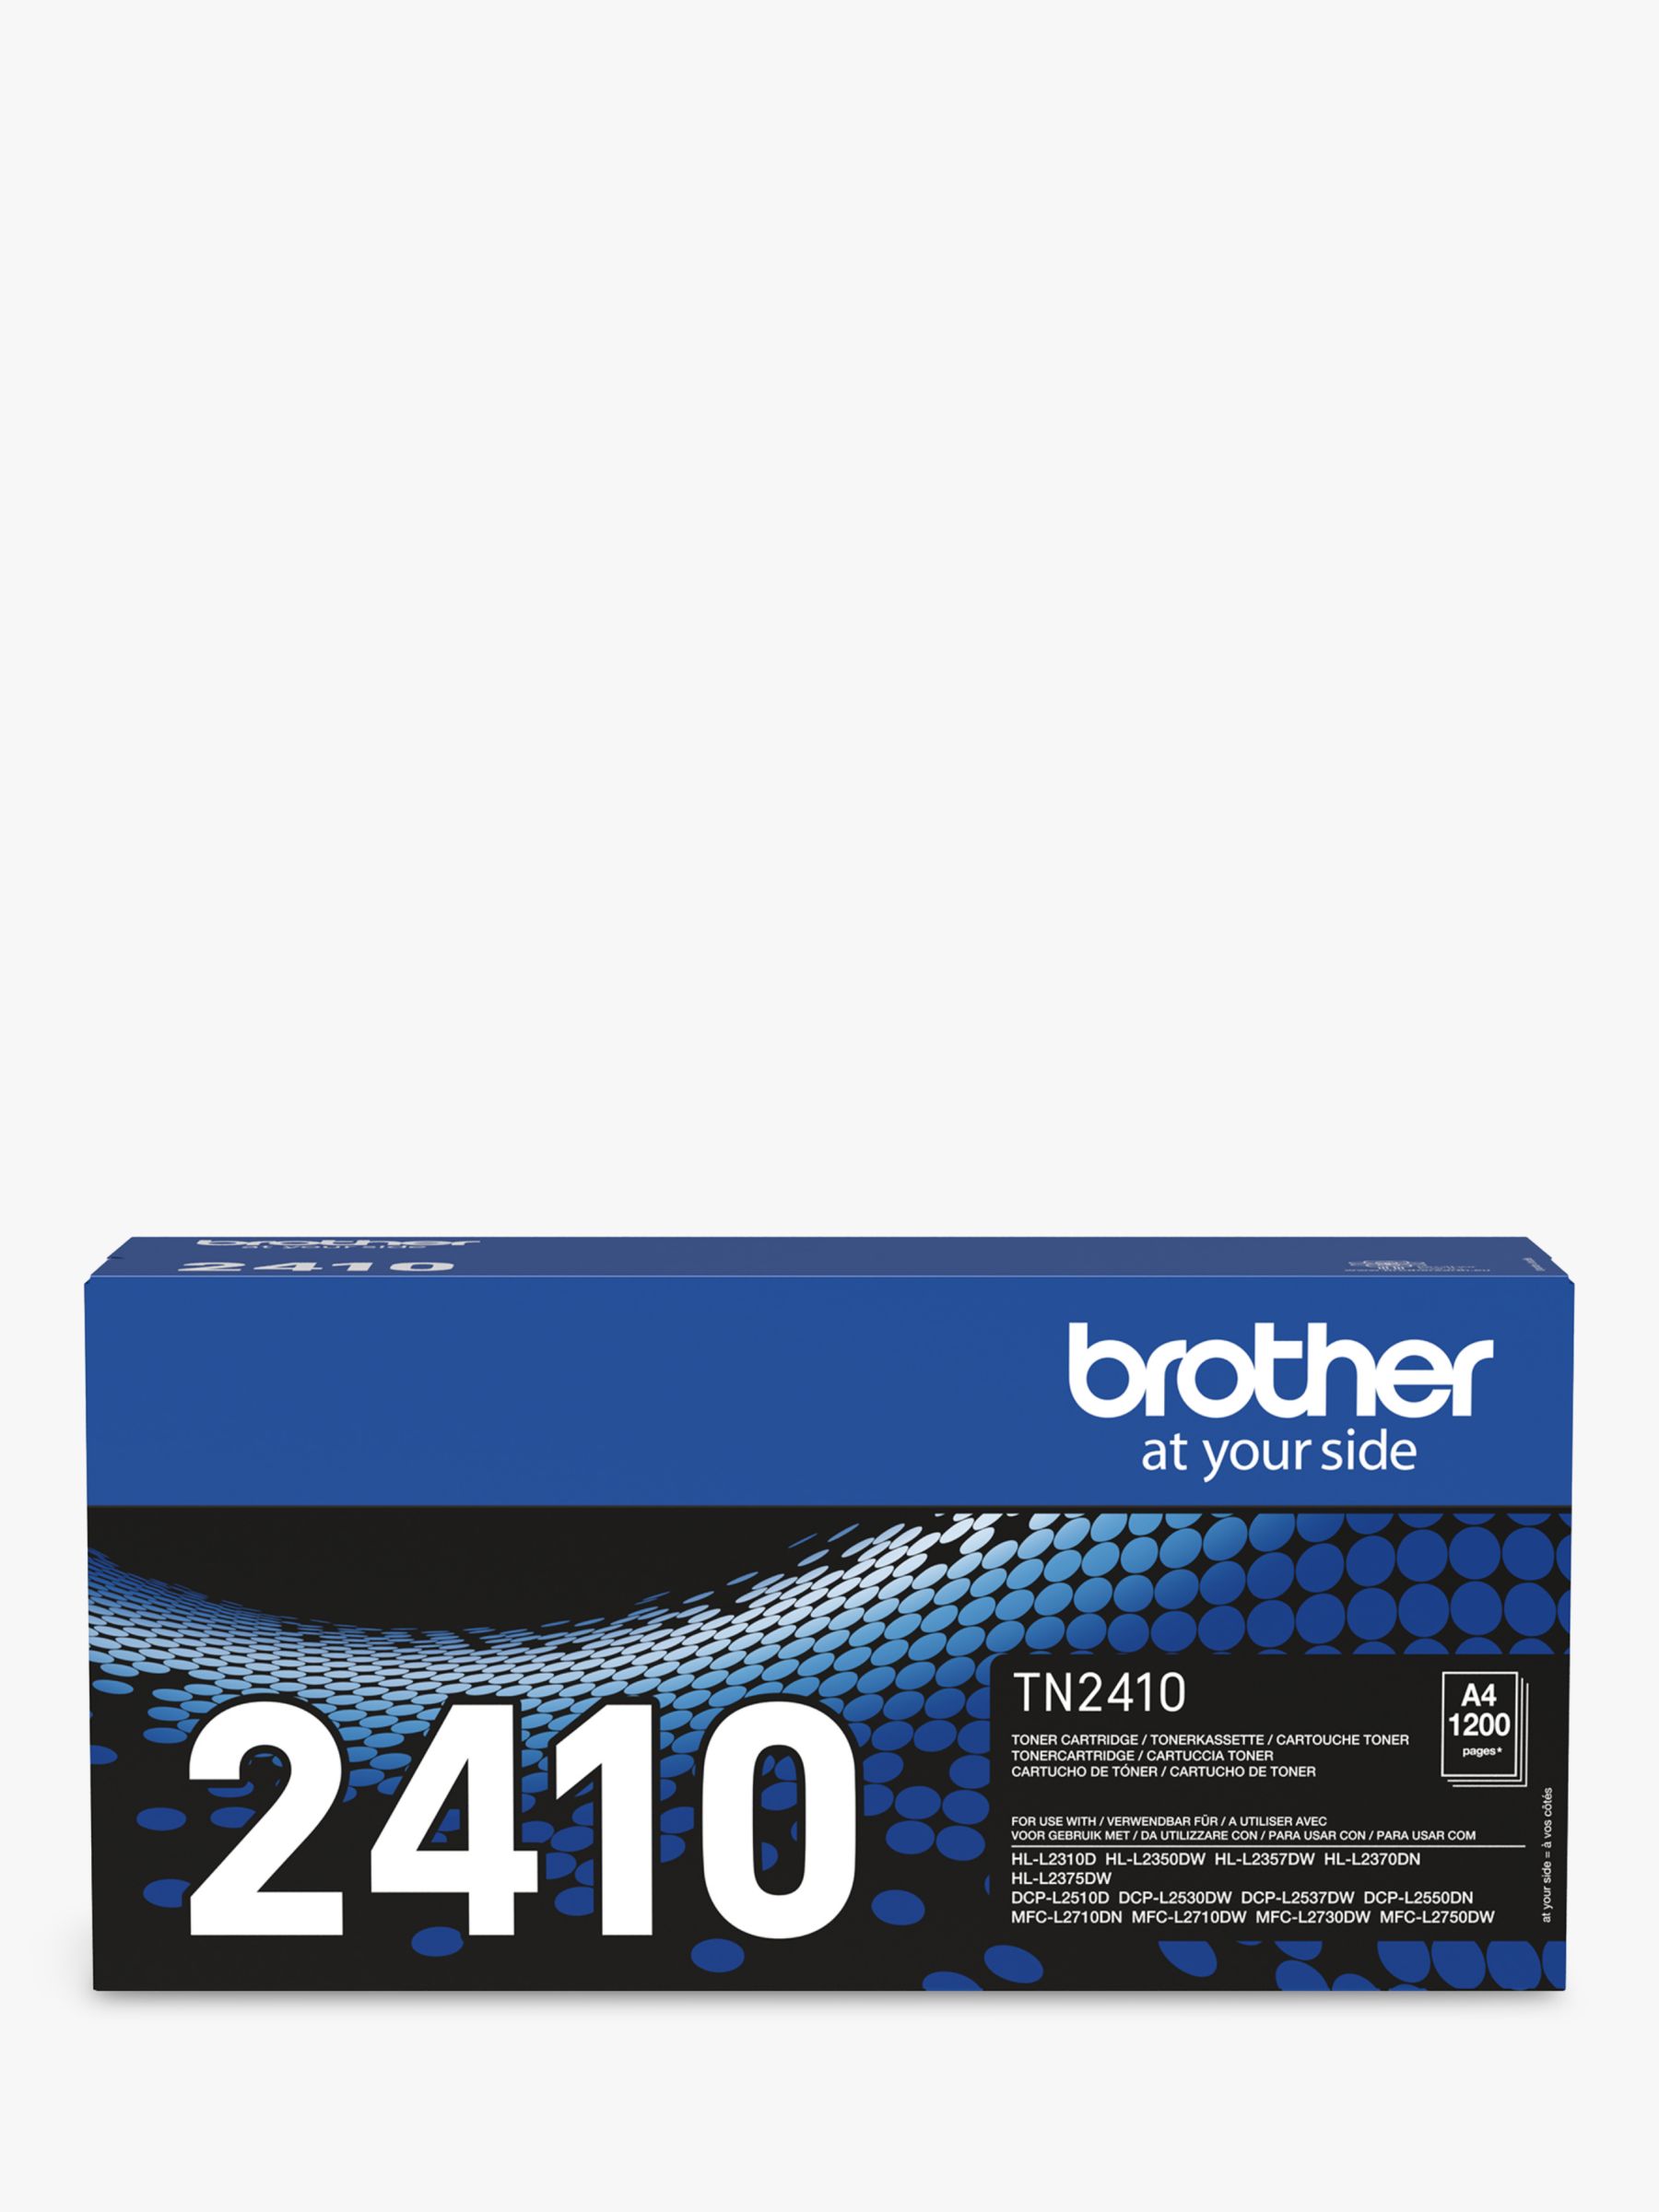 Toner Cartridge for Brother TN2410 HL-L2310D India